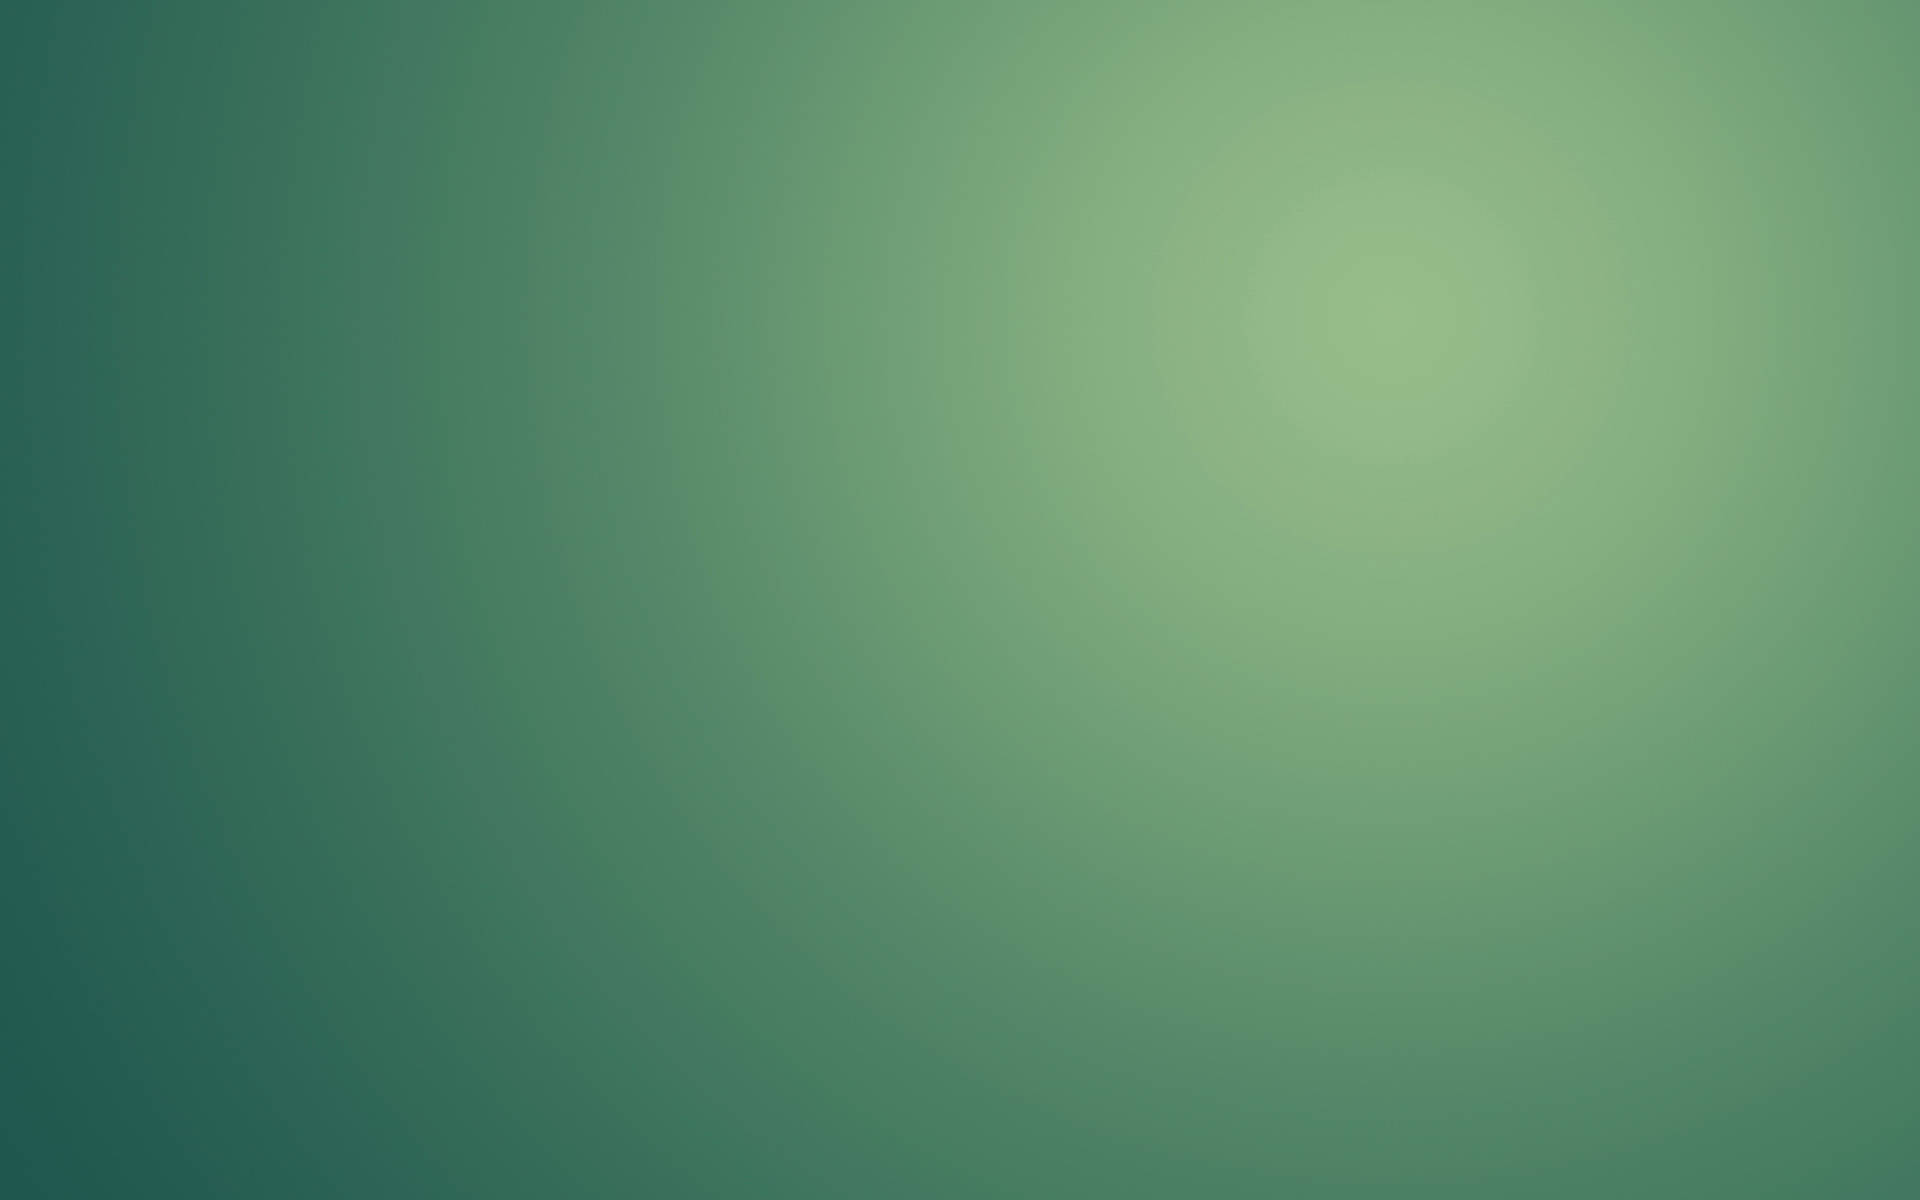 Fern-shaded Plain Green Background